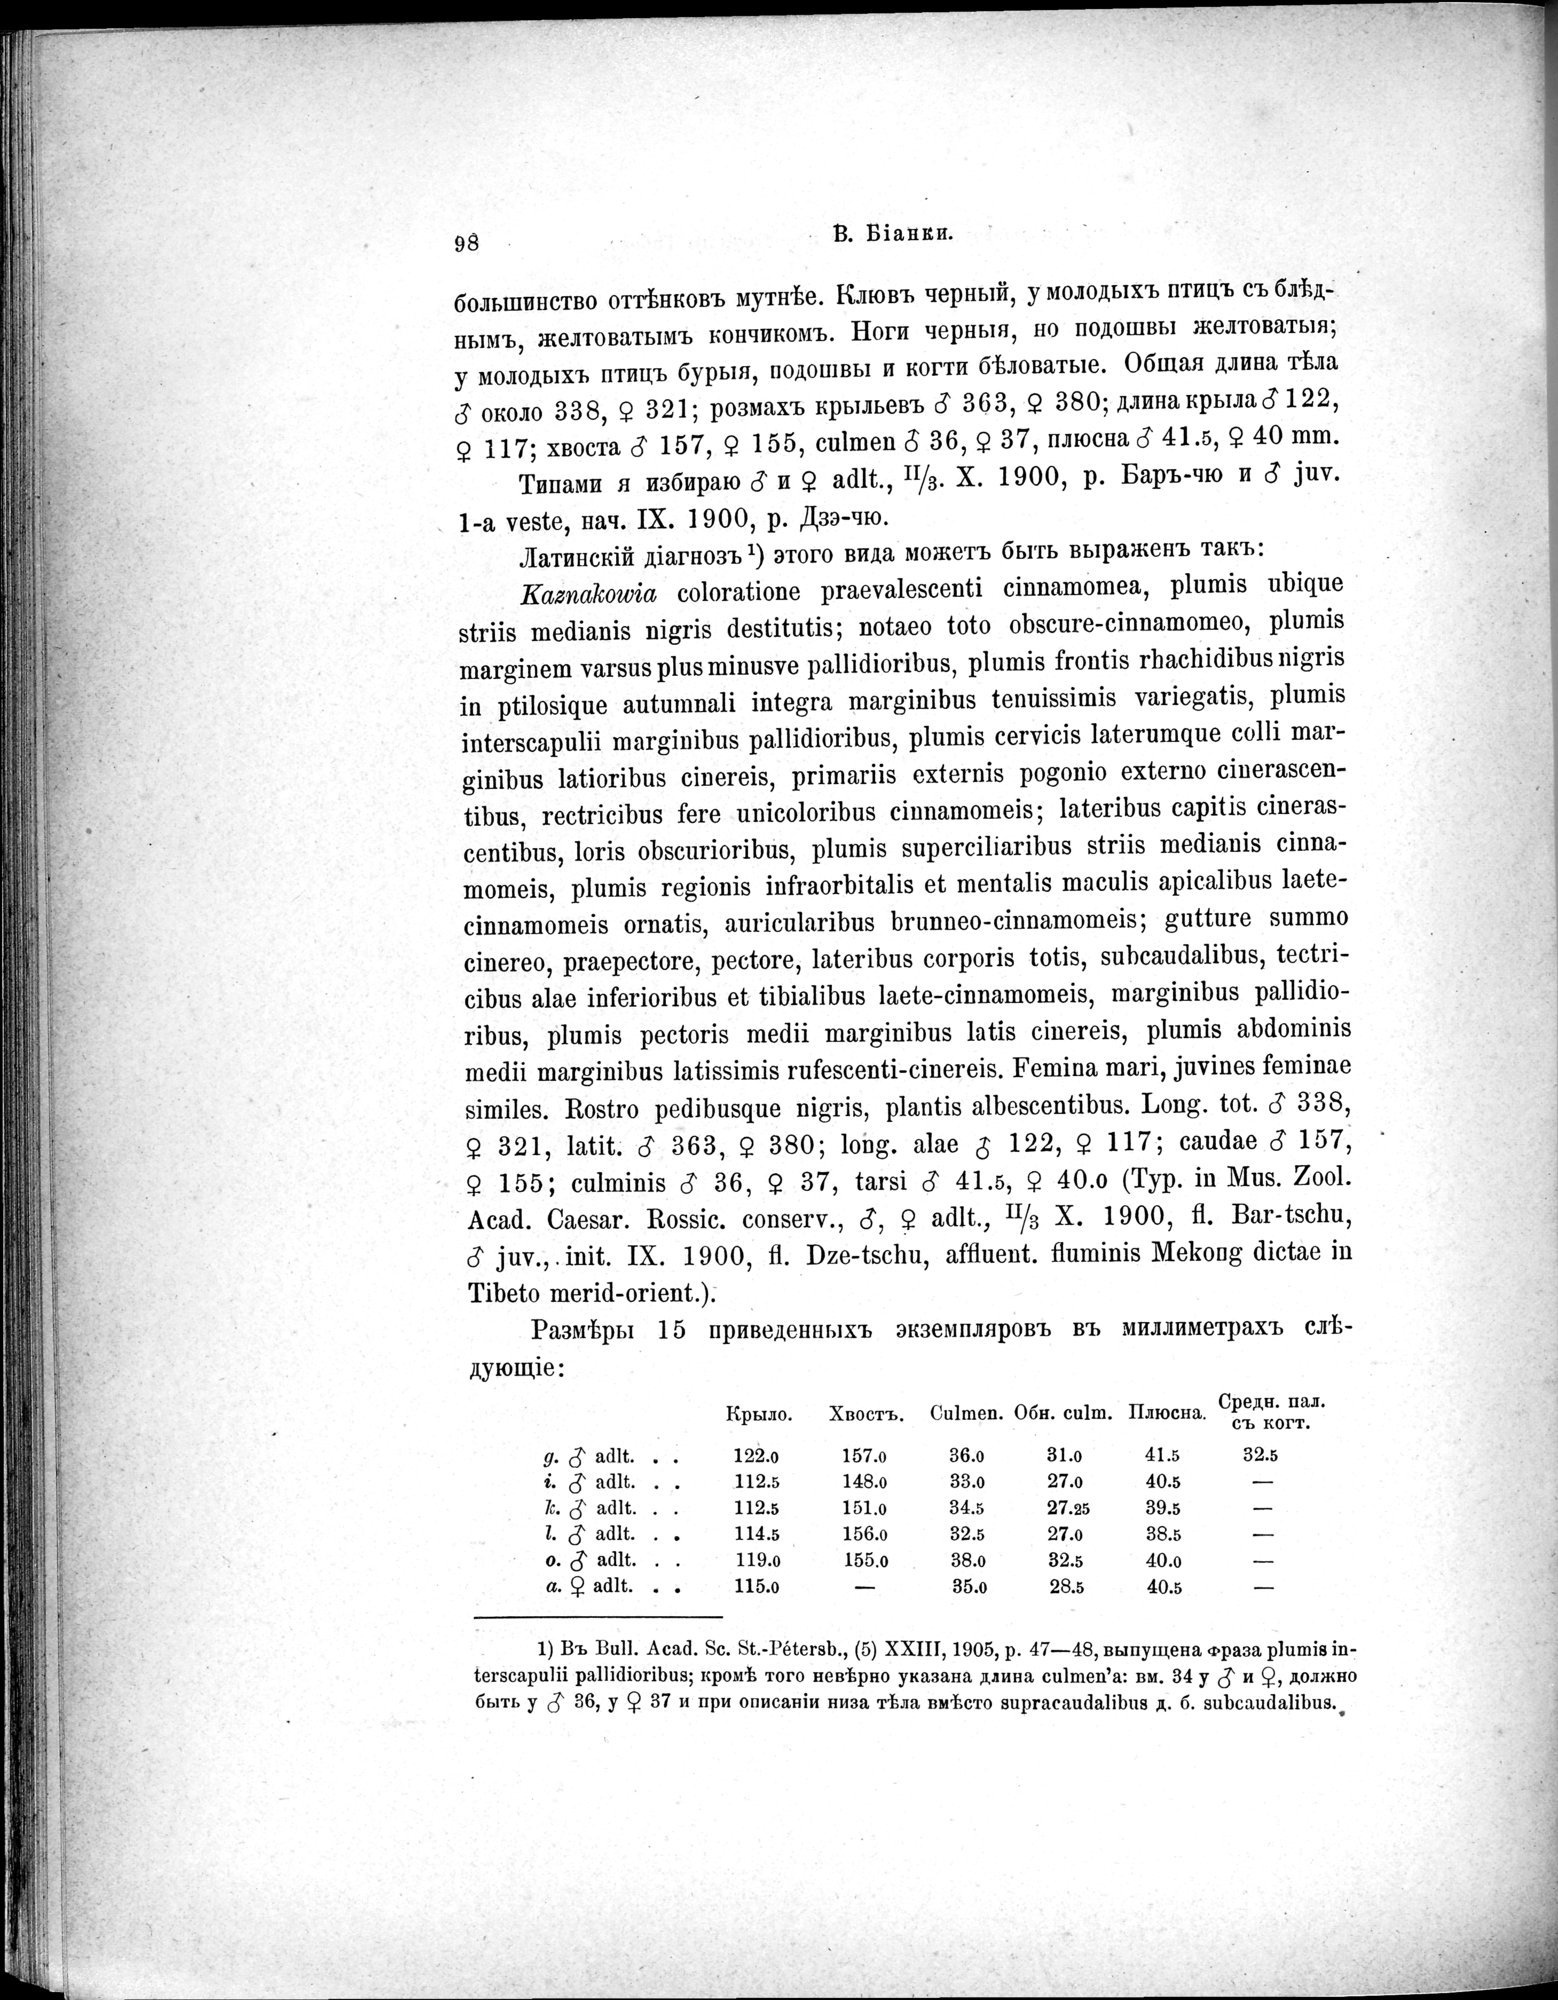 Mongoliia i Kam : vol.5 / Page 170 (Grayscale High Resolution Image)